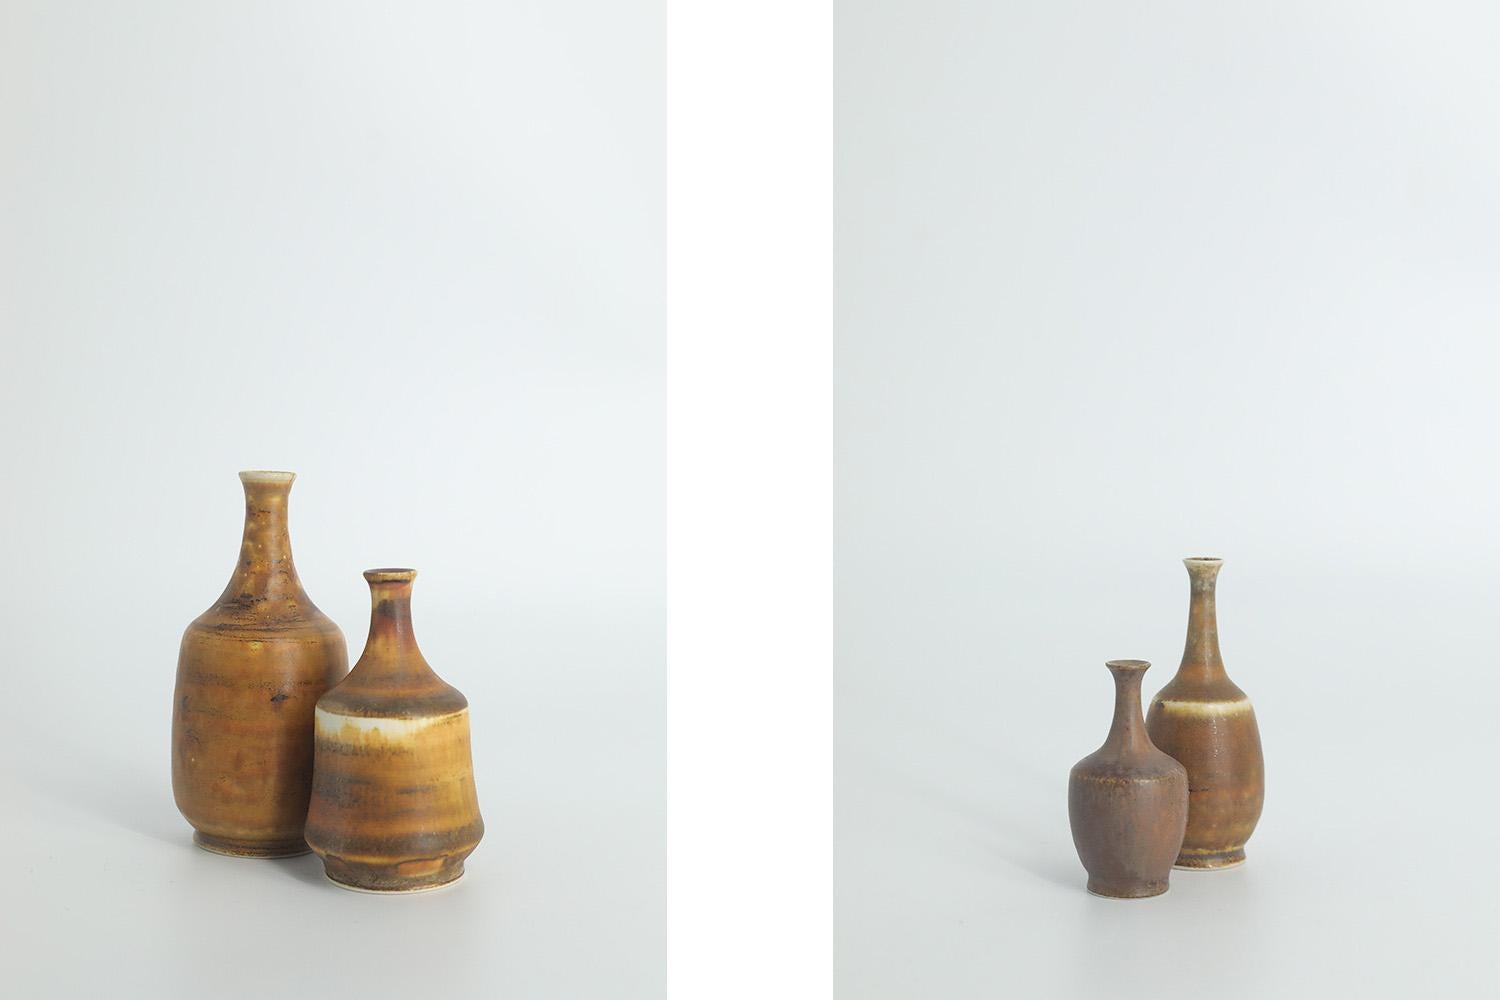 1. Height 10 cm | Width 4.5 cm | Depth 4.5 cm
2. Height 8 cm | Width 4.5 cm | Depth 4.5 cm
3. Height 6 cm | Width 2.5 cm | Depth 2.5 cm
4. Height 4.5 cm | Width 2 cm | Depth 2 cm

This set of 4 miniature vases was designed by Gunnar Borg for the